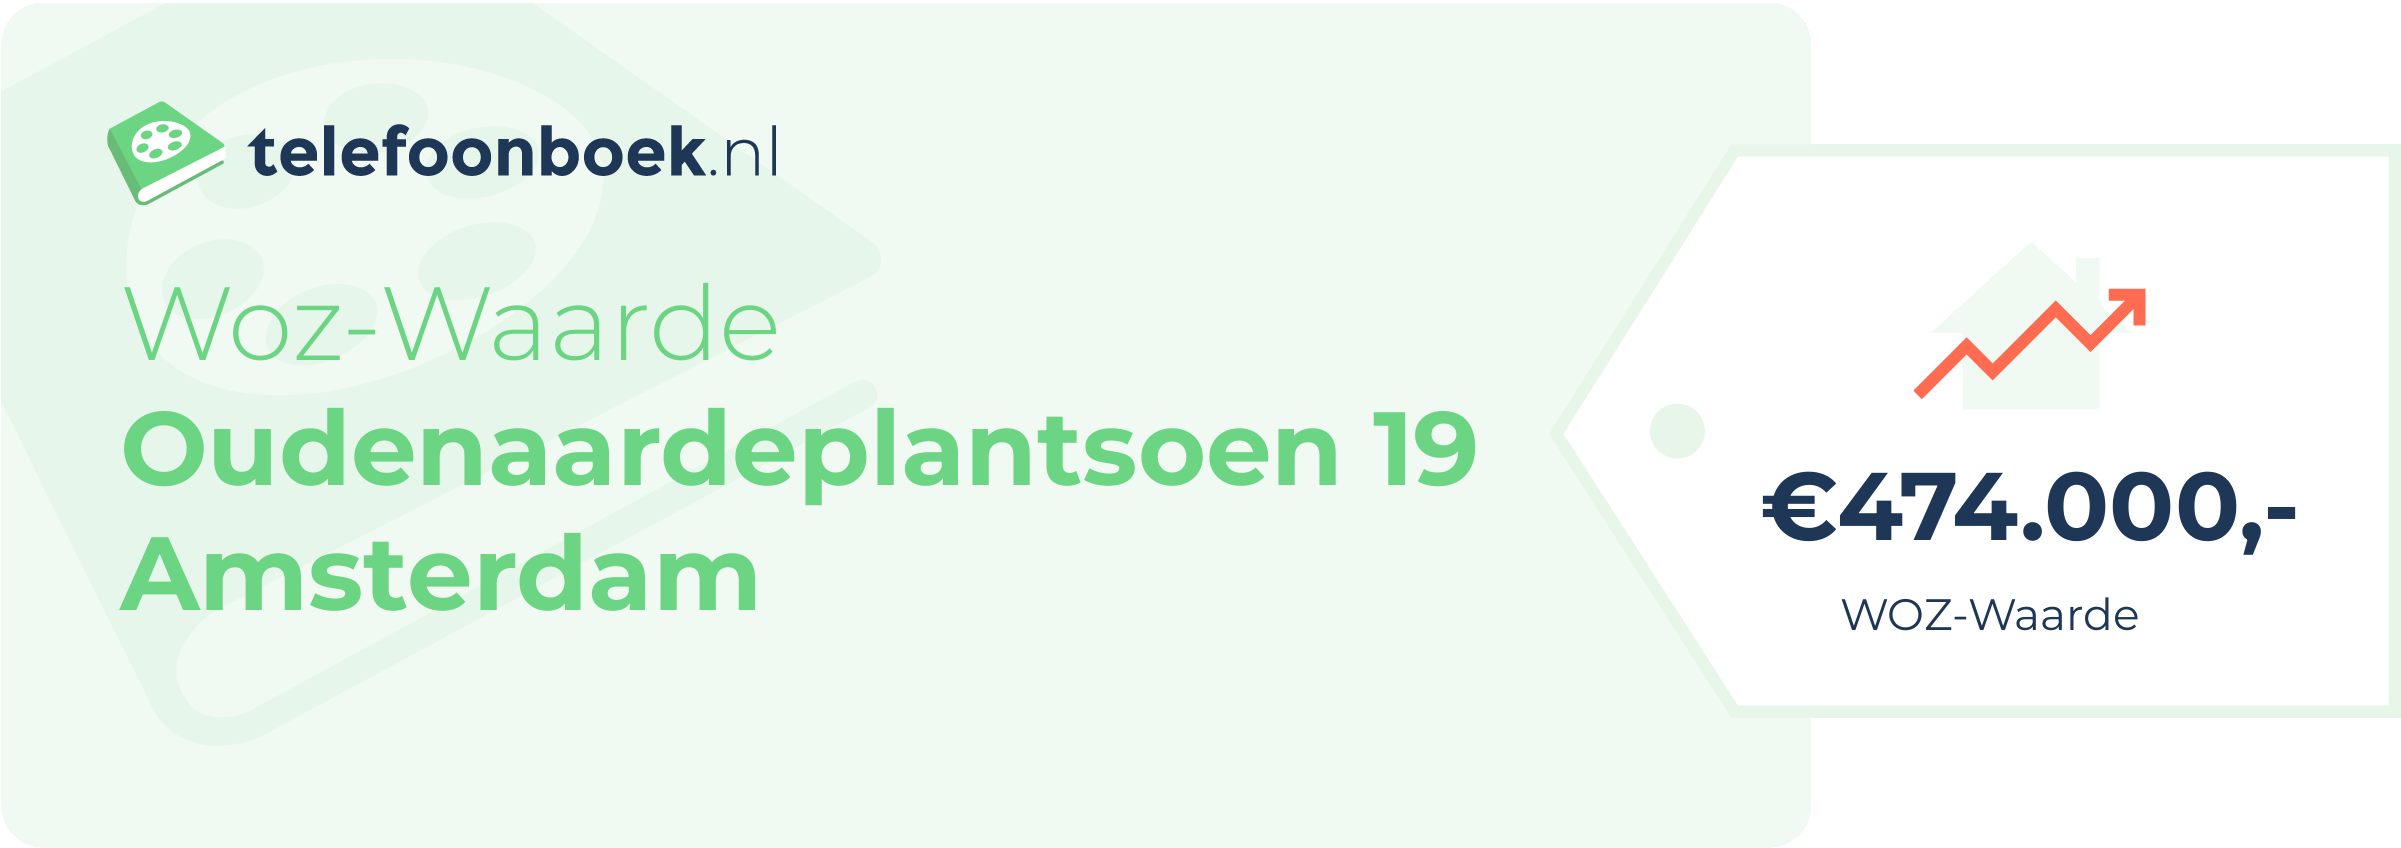 WOZ-waarde Oudenaardeplantsoen 19 Amsterdam